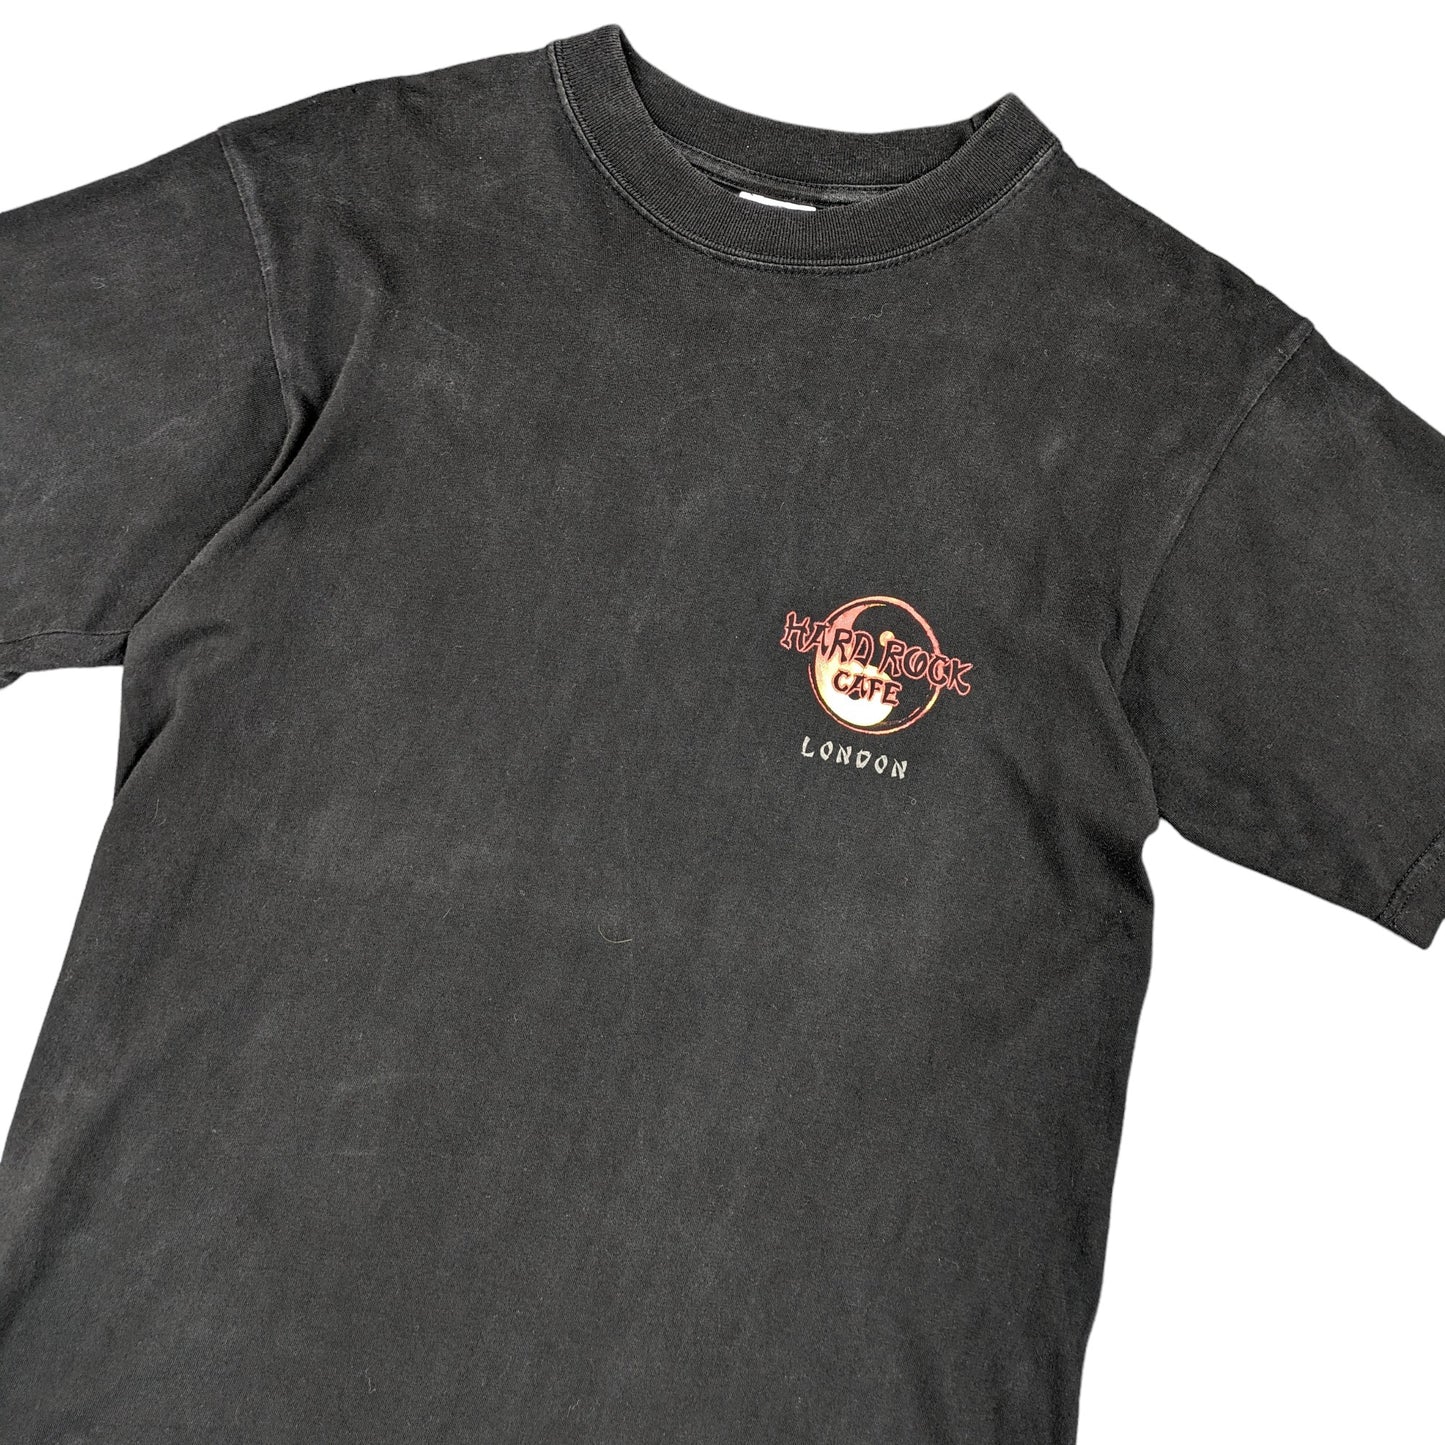 00s Hard Rock Cafe London T-Shirt Size S